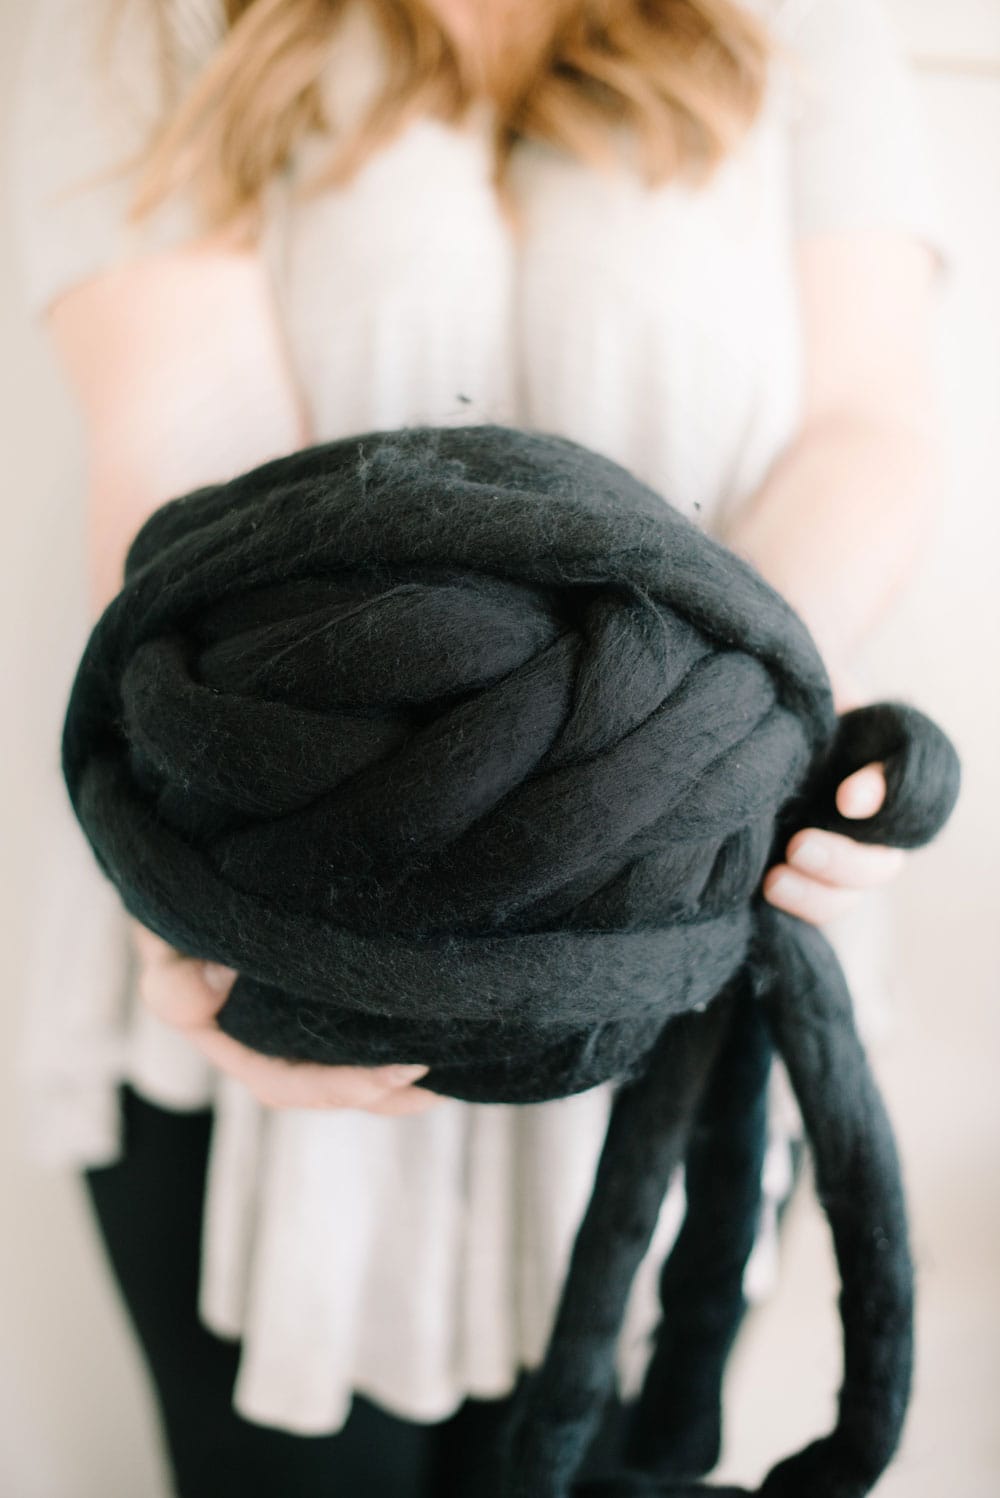 DIY Super Chunky Merino Wool Foldover Clutch Knit Kit – MANUOSH